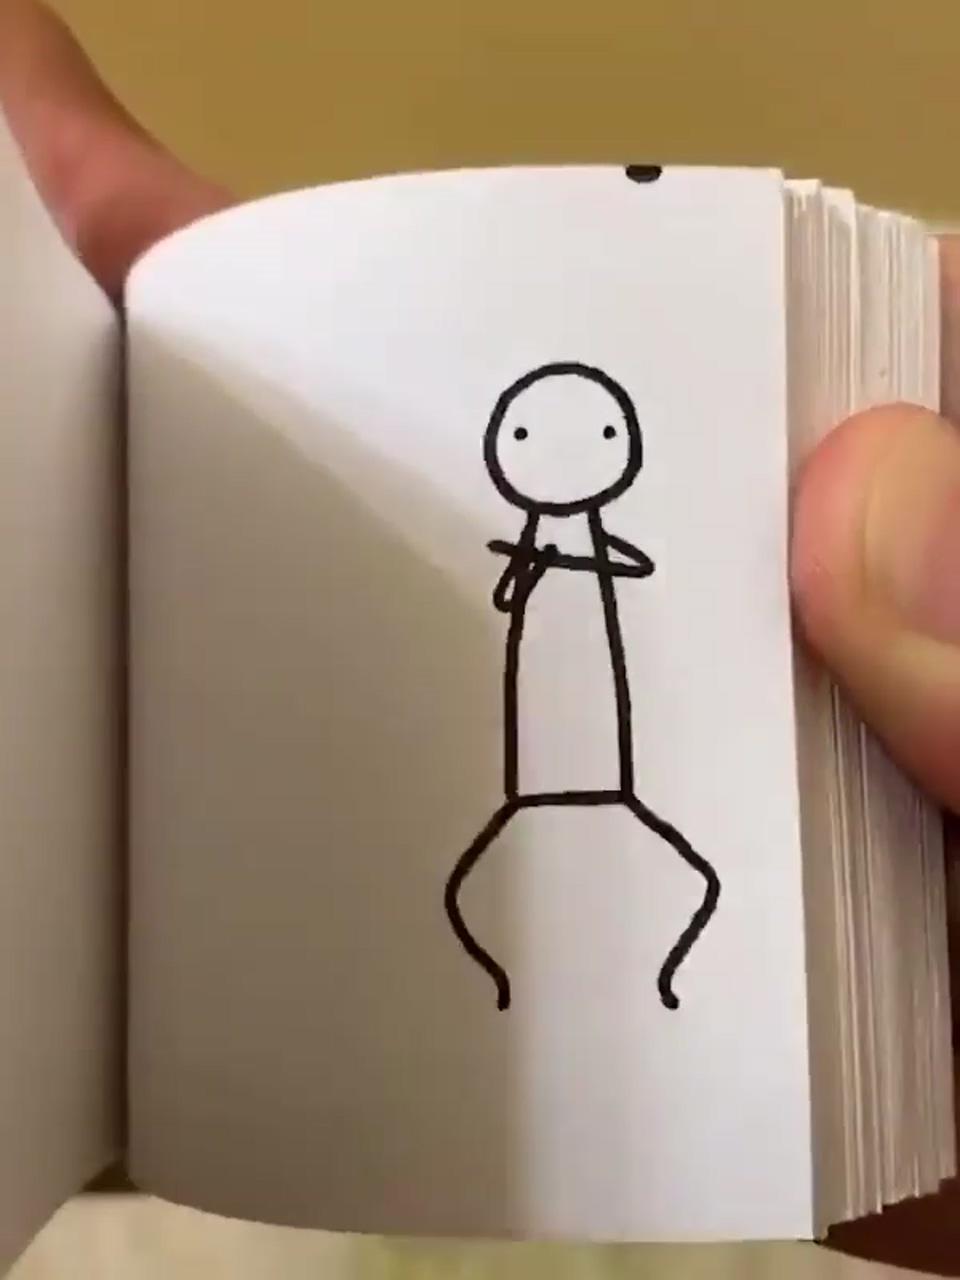 Dancing come on | cute easy drawings